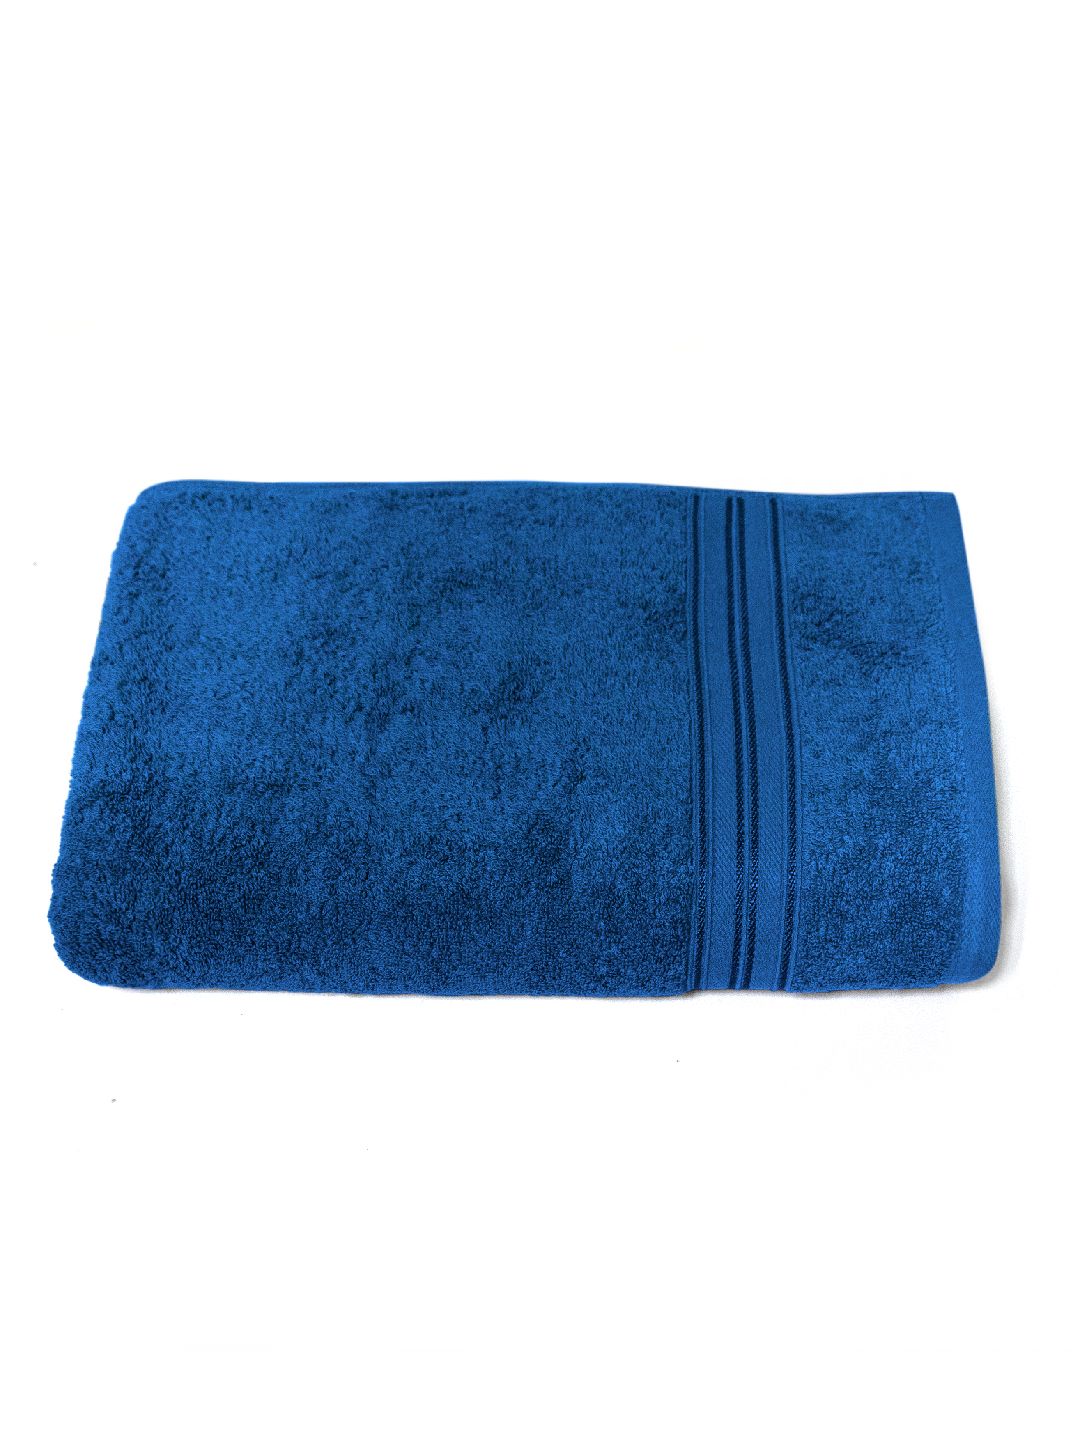 swiss republic Navy Blue Cotton 600 GSM Bath Towel Price in India